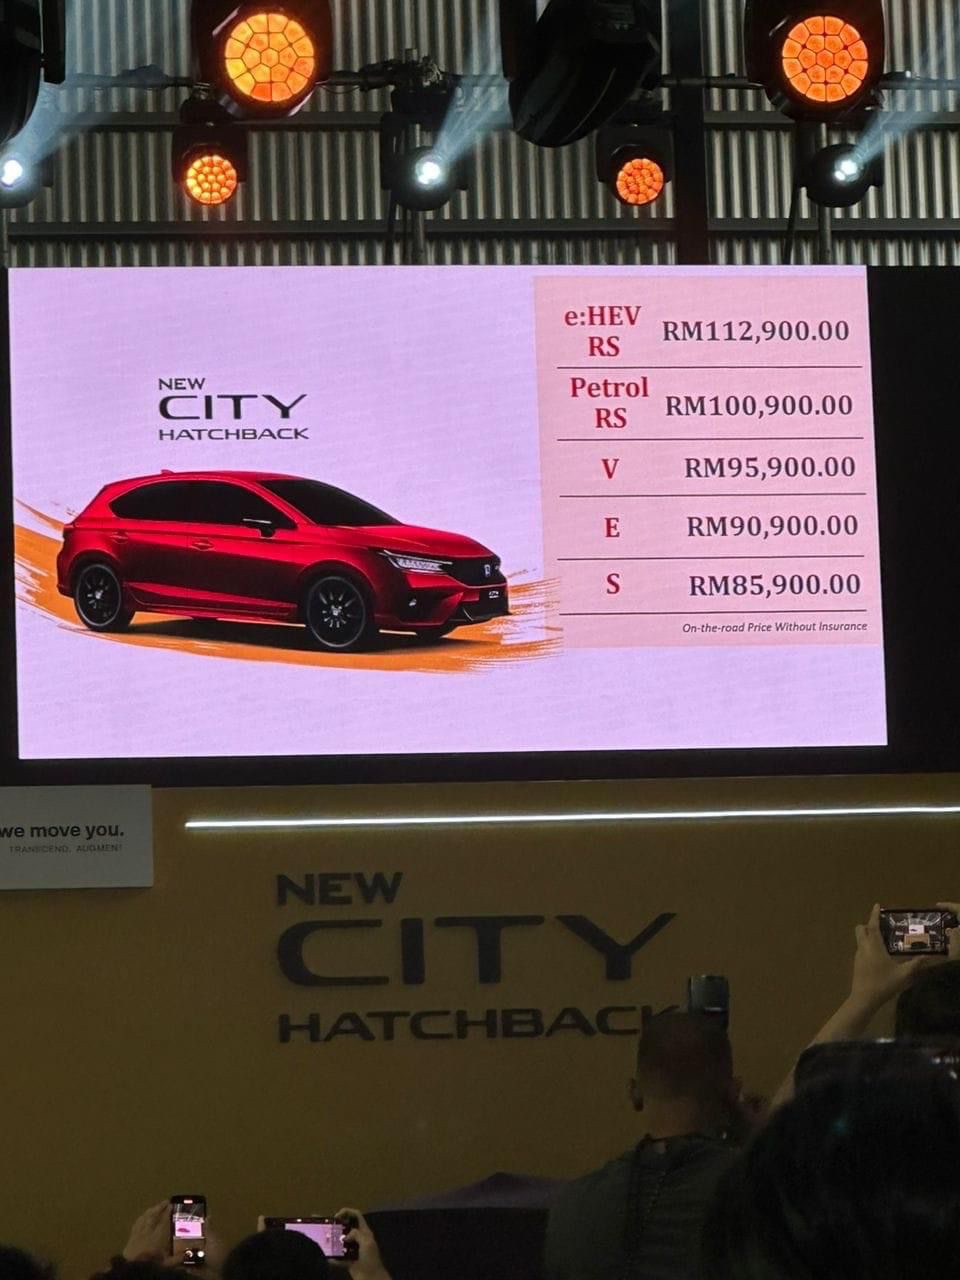 Harga berate Honda City Hatchback facelift ???